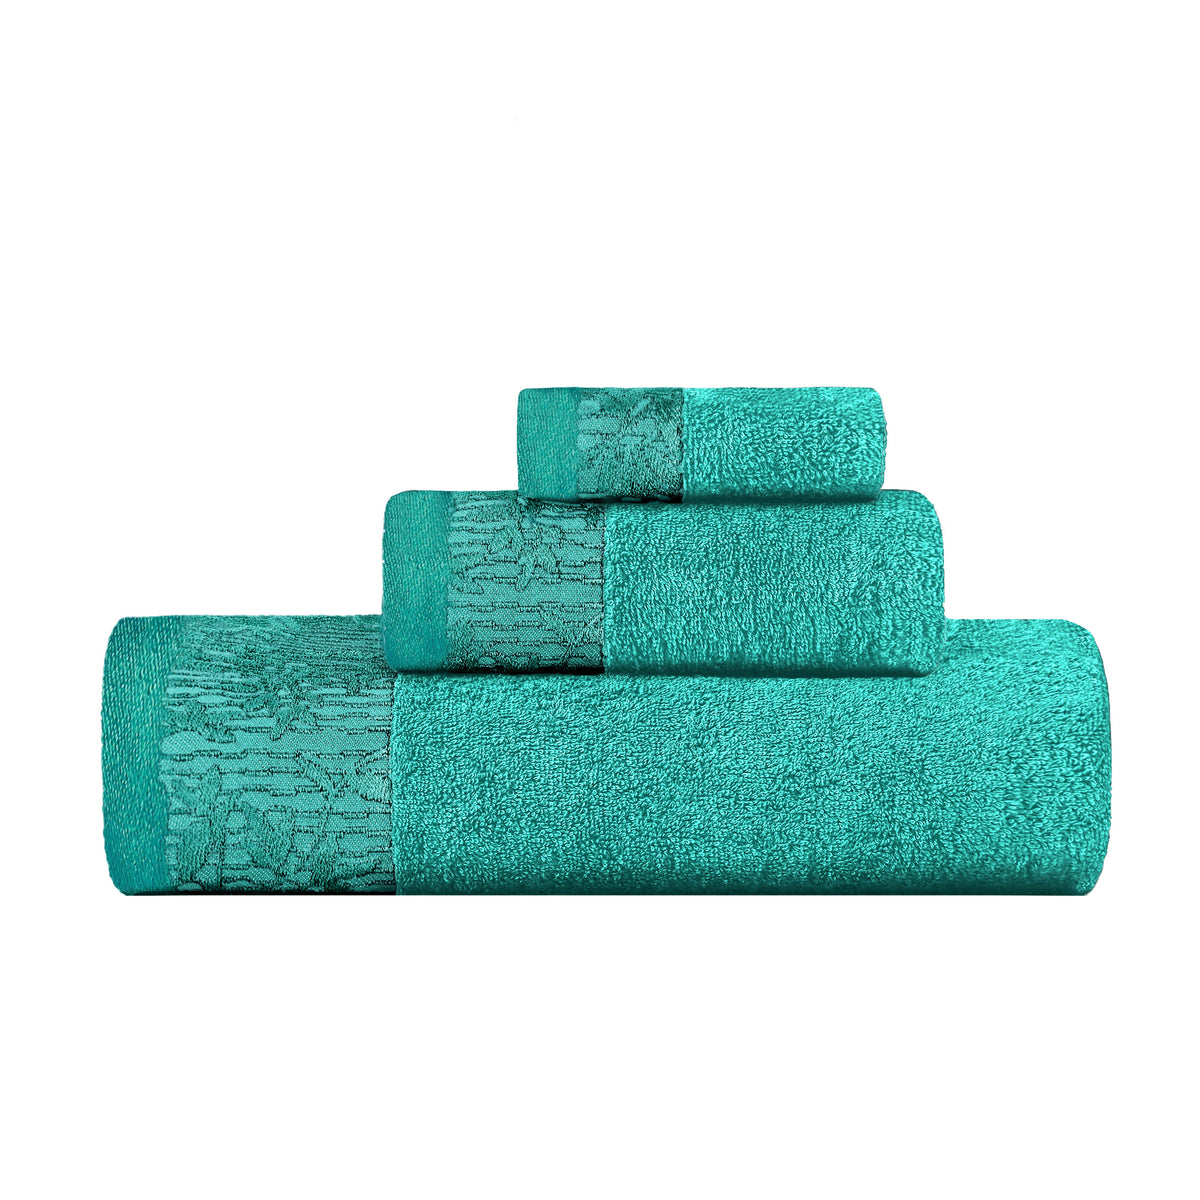 Superior Wisteria Cotton Floral Jacquard 3 Piece Towel Set - Turquoise